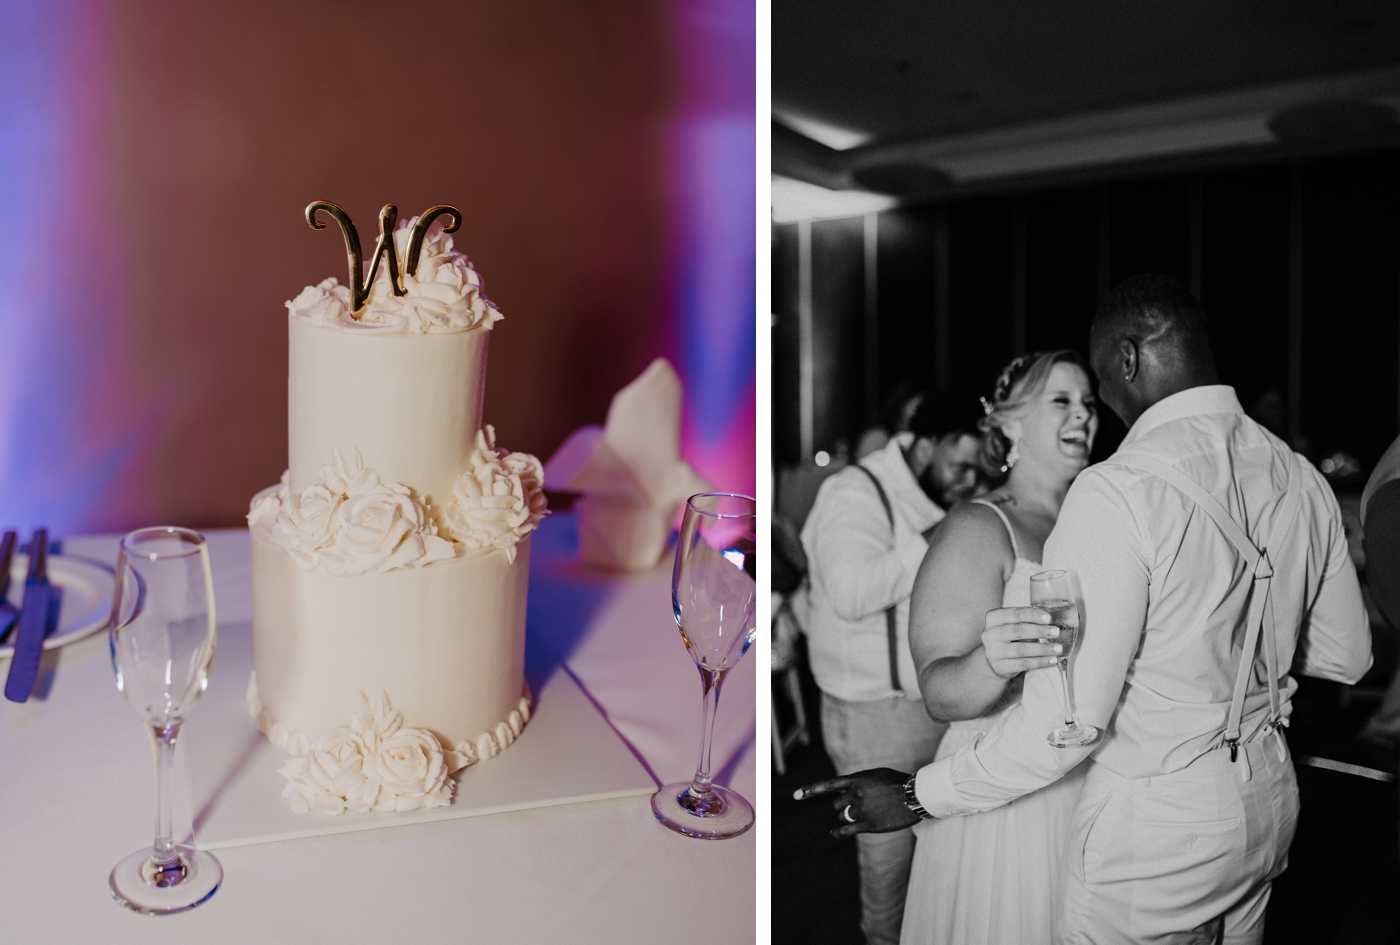 Cake cutting at a destination wedding in Jamaica